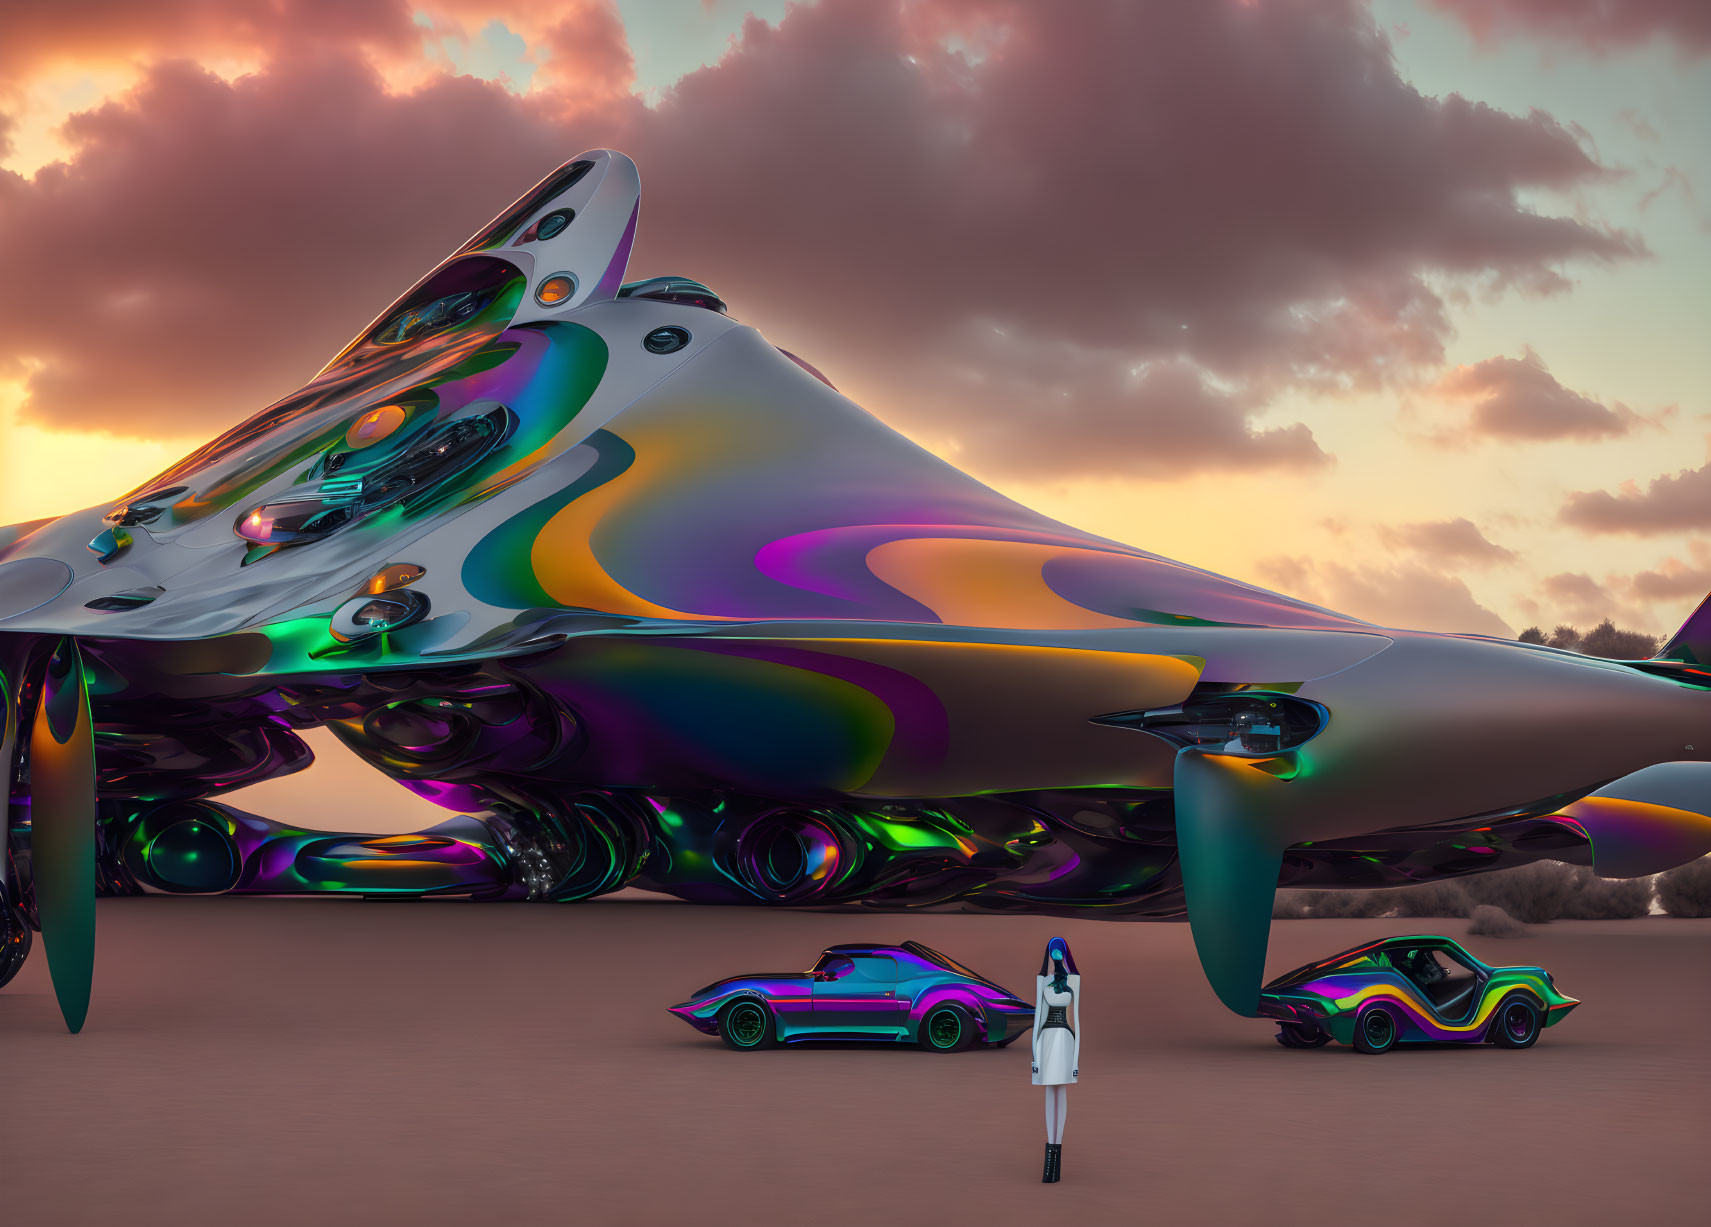 Iridescent spaceship, futuristic cars, and astronaut at dusk